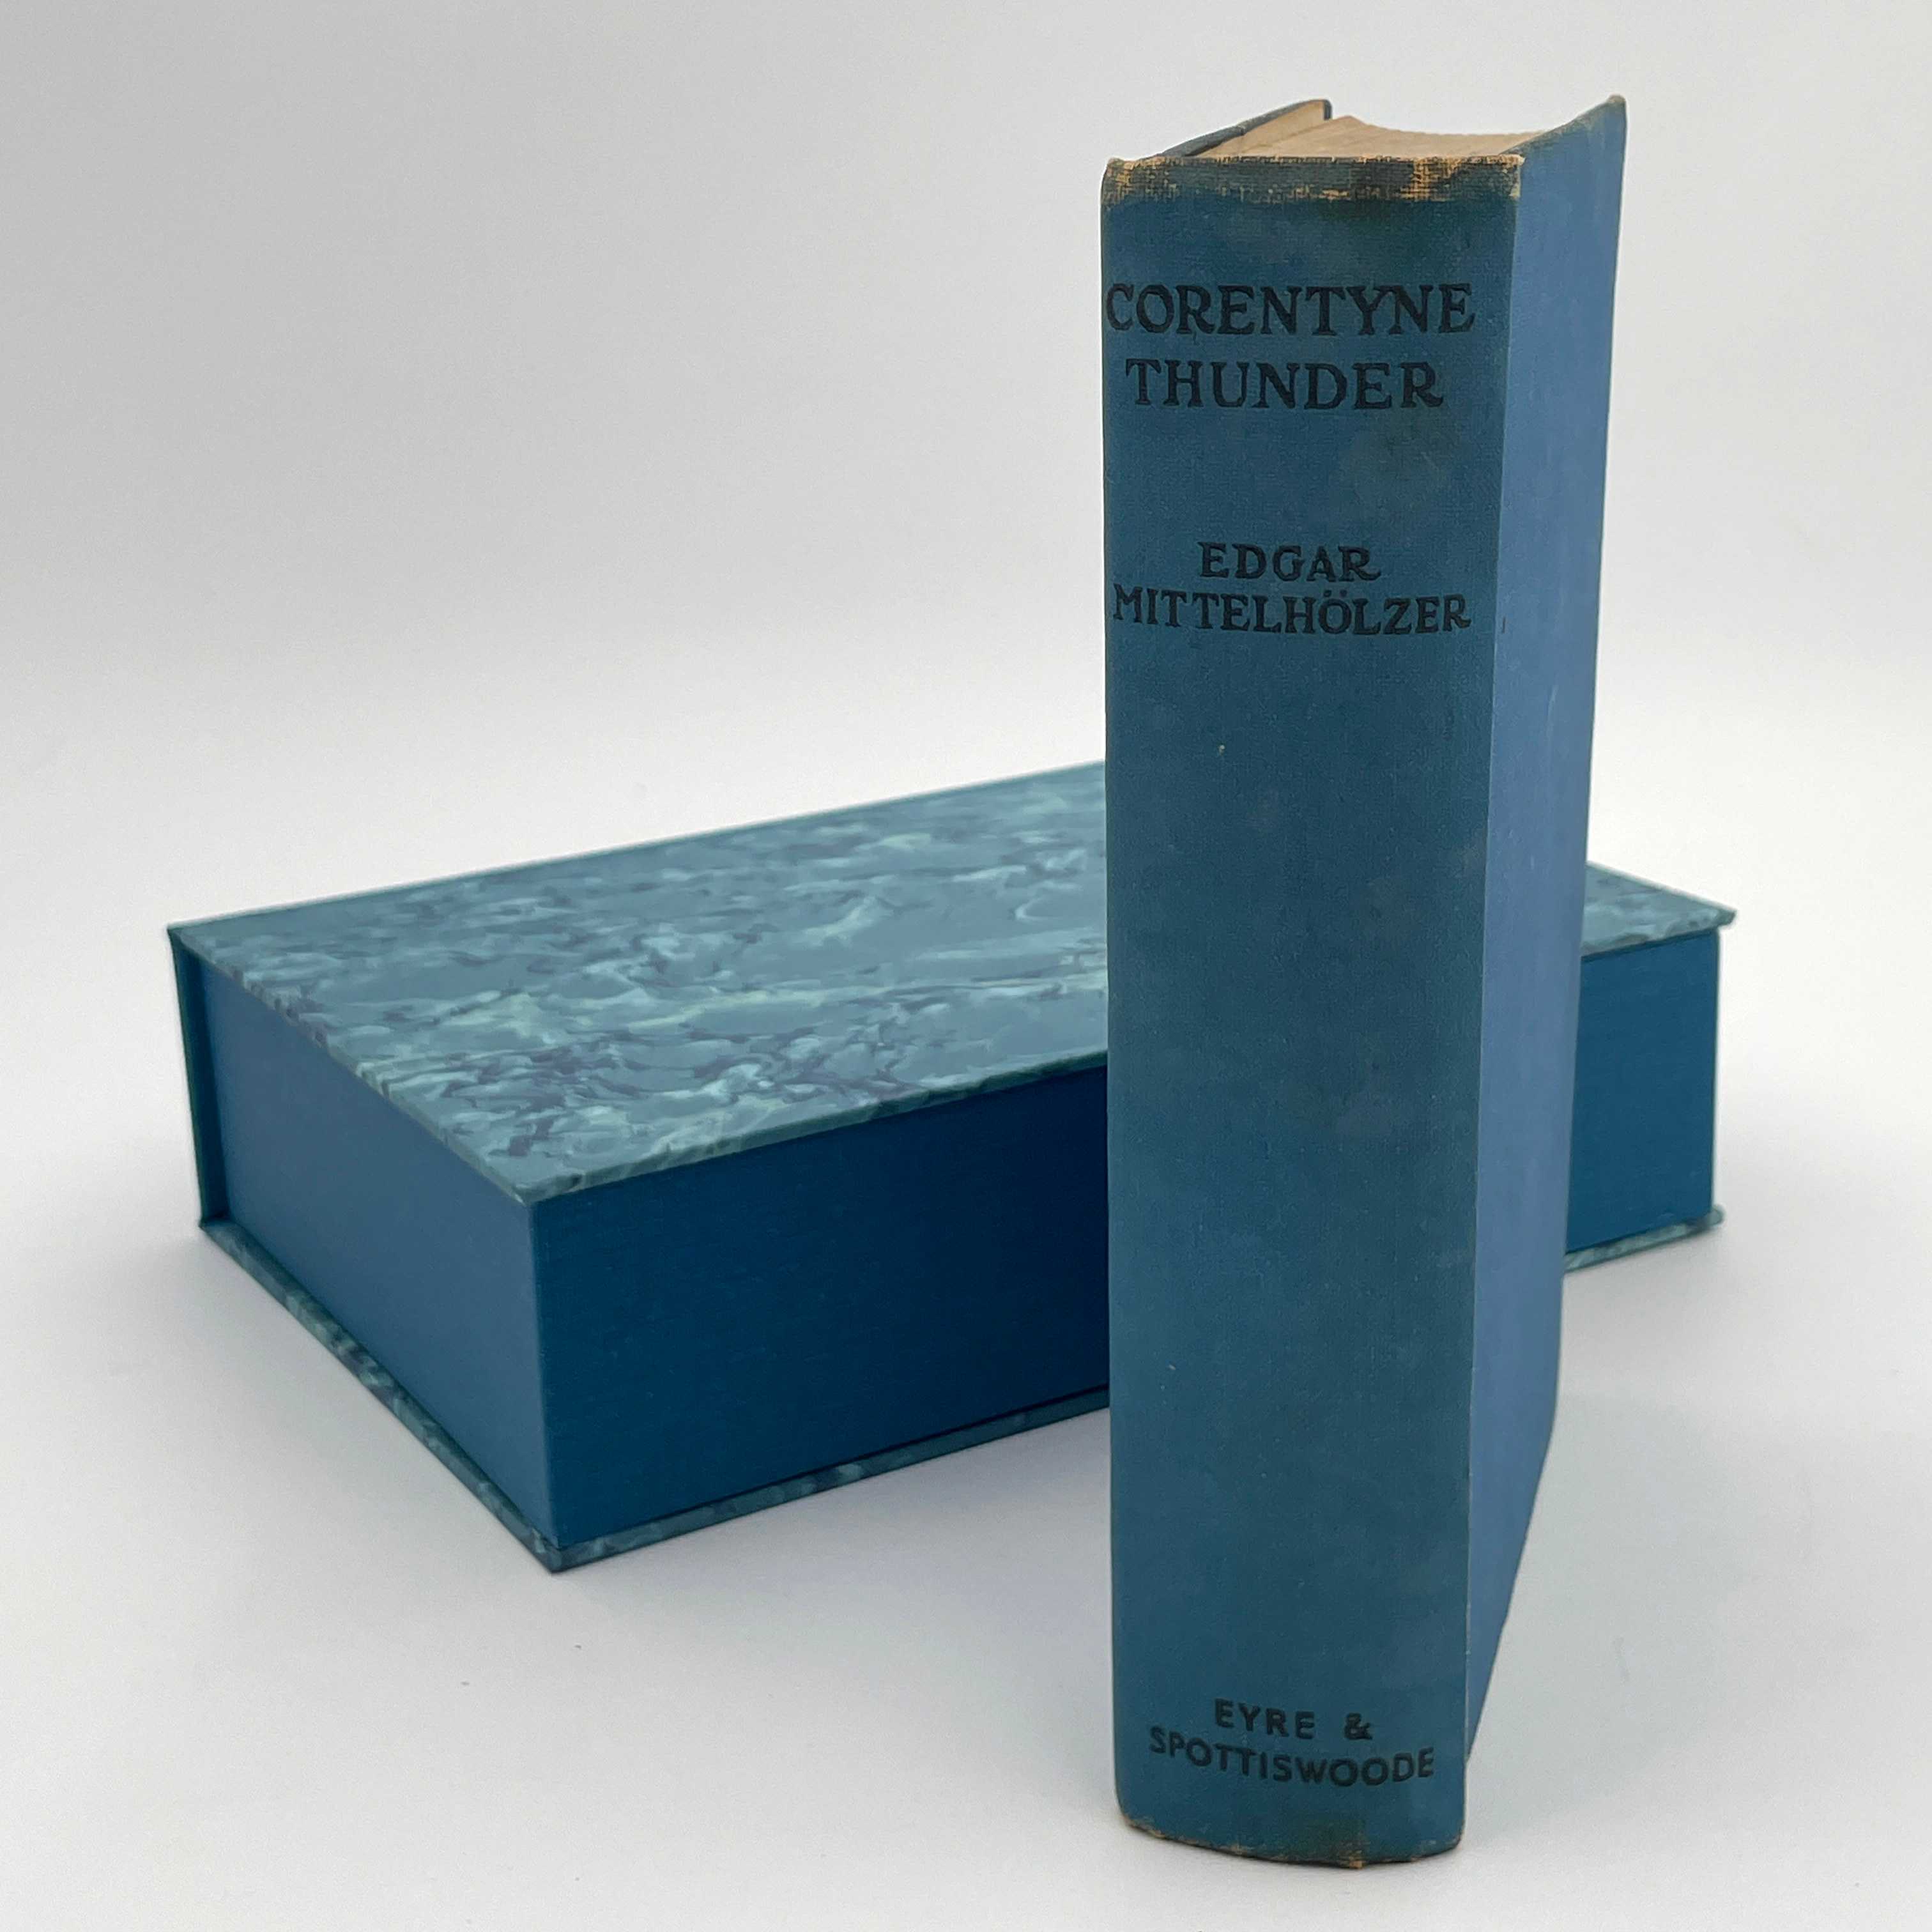 First edition of the book Corentyne Thunder by Edgar Mittelholzer